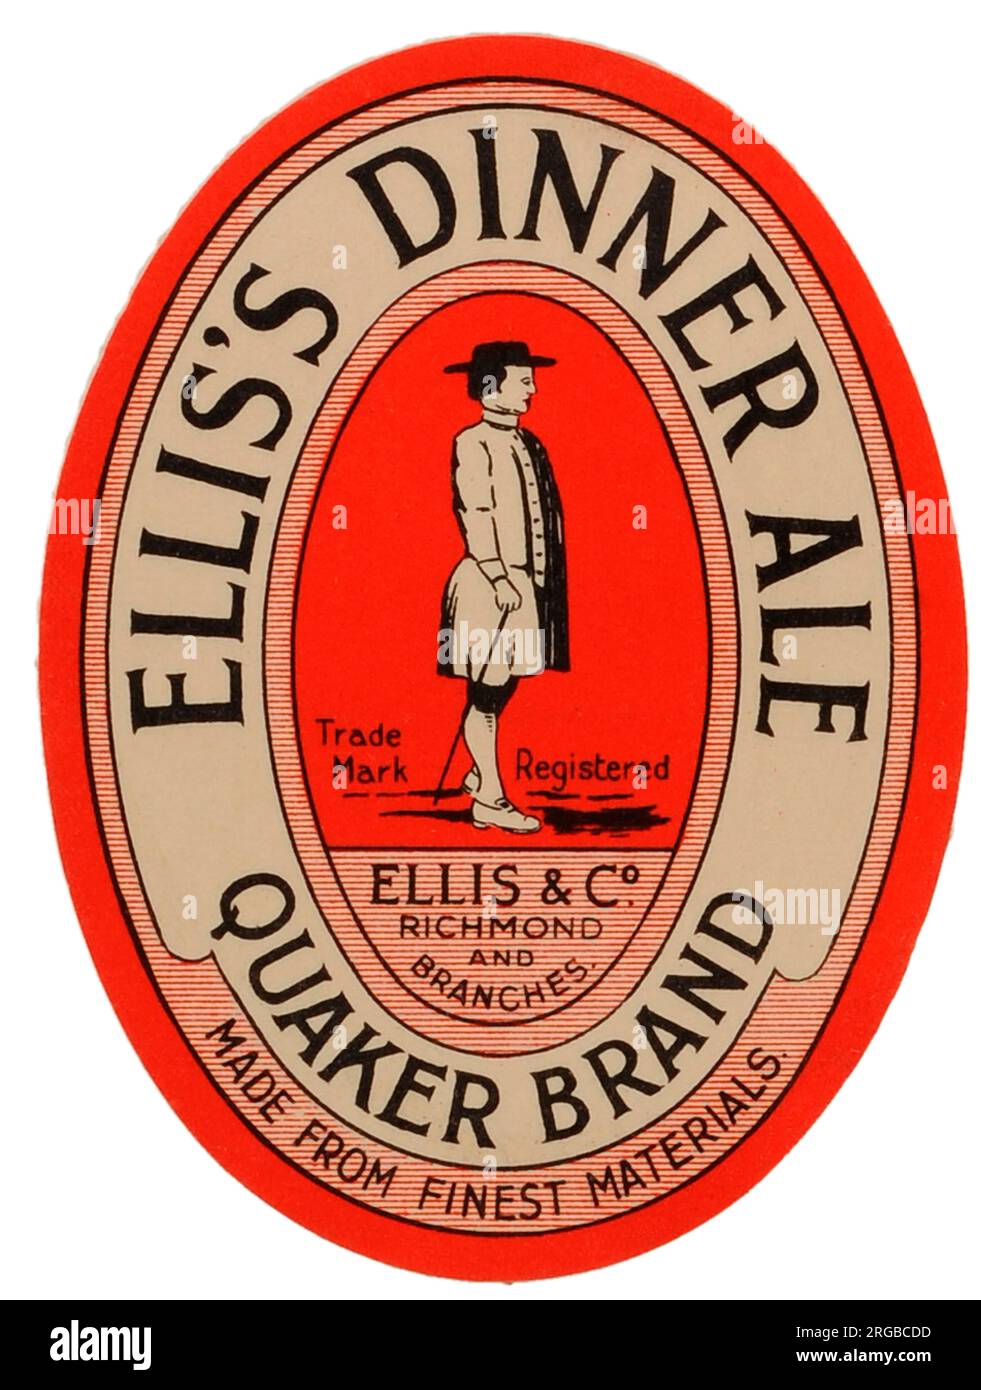 Ellis's Dinner Ale Stock Photo